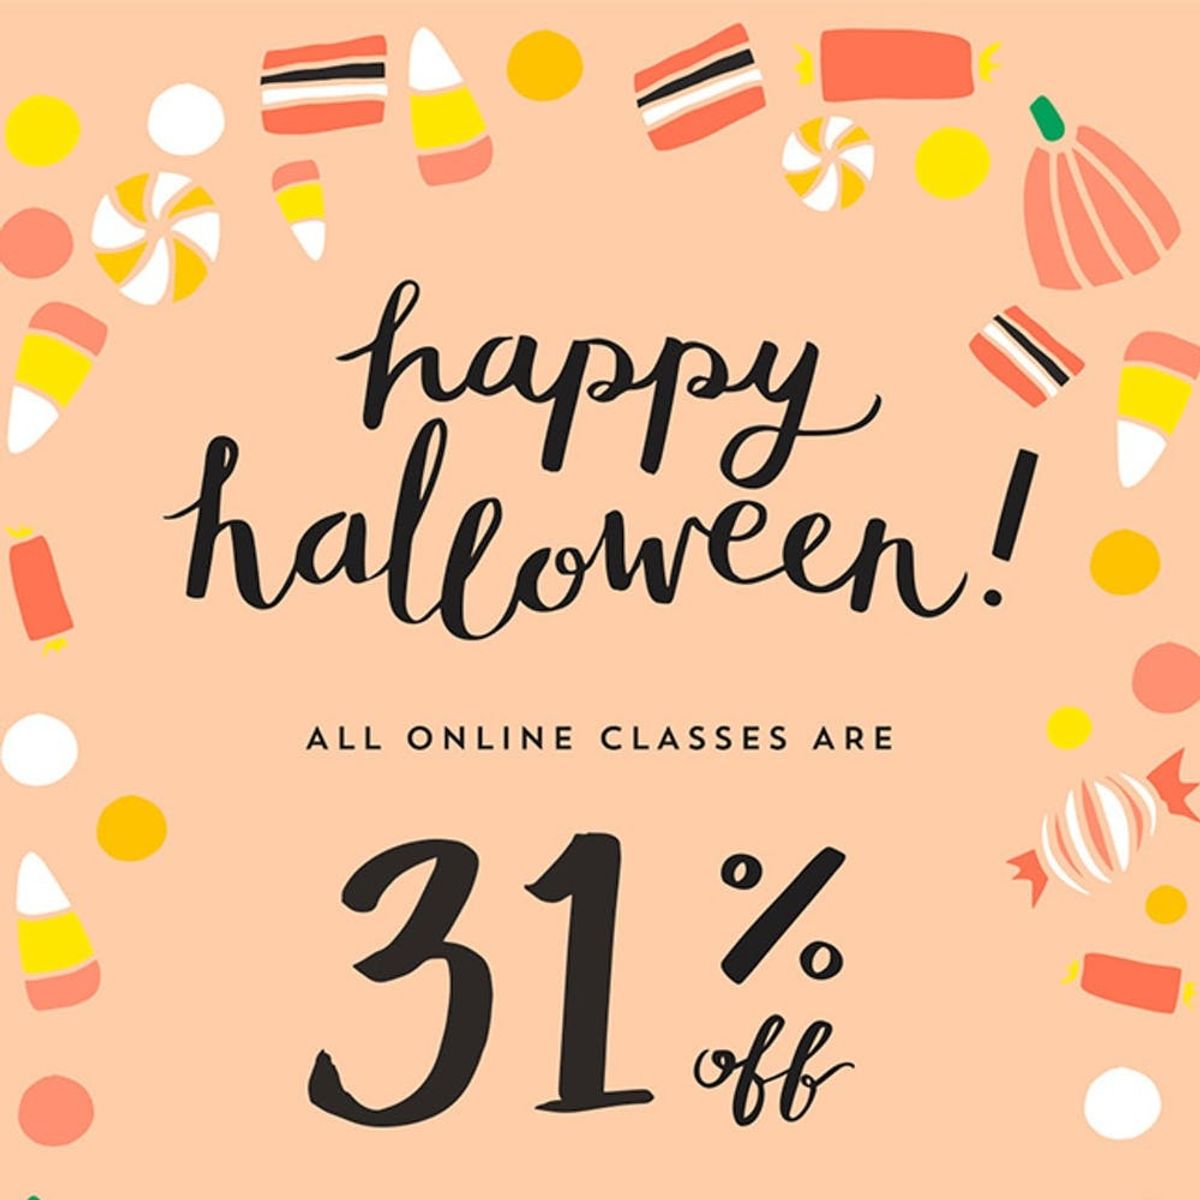 Happy Halloween! Enjoy 31% Off These Spooktacular Classes